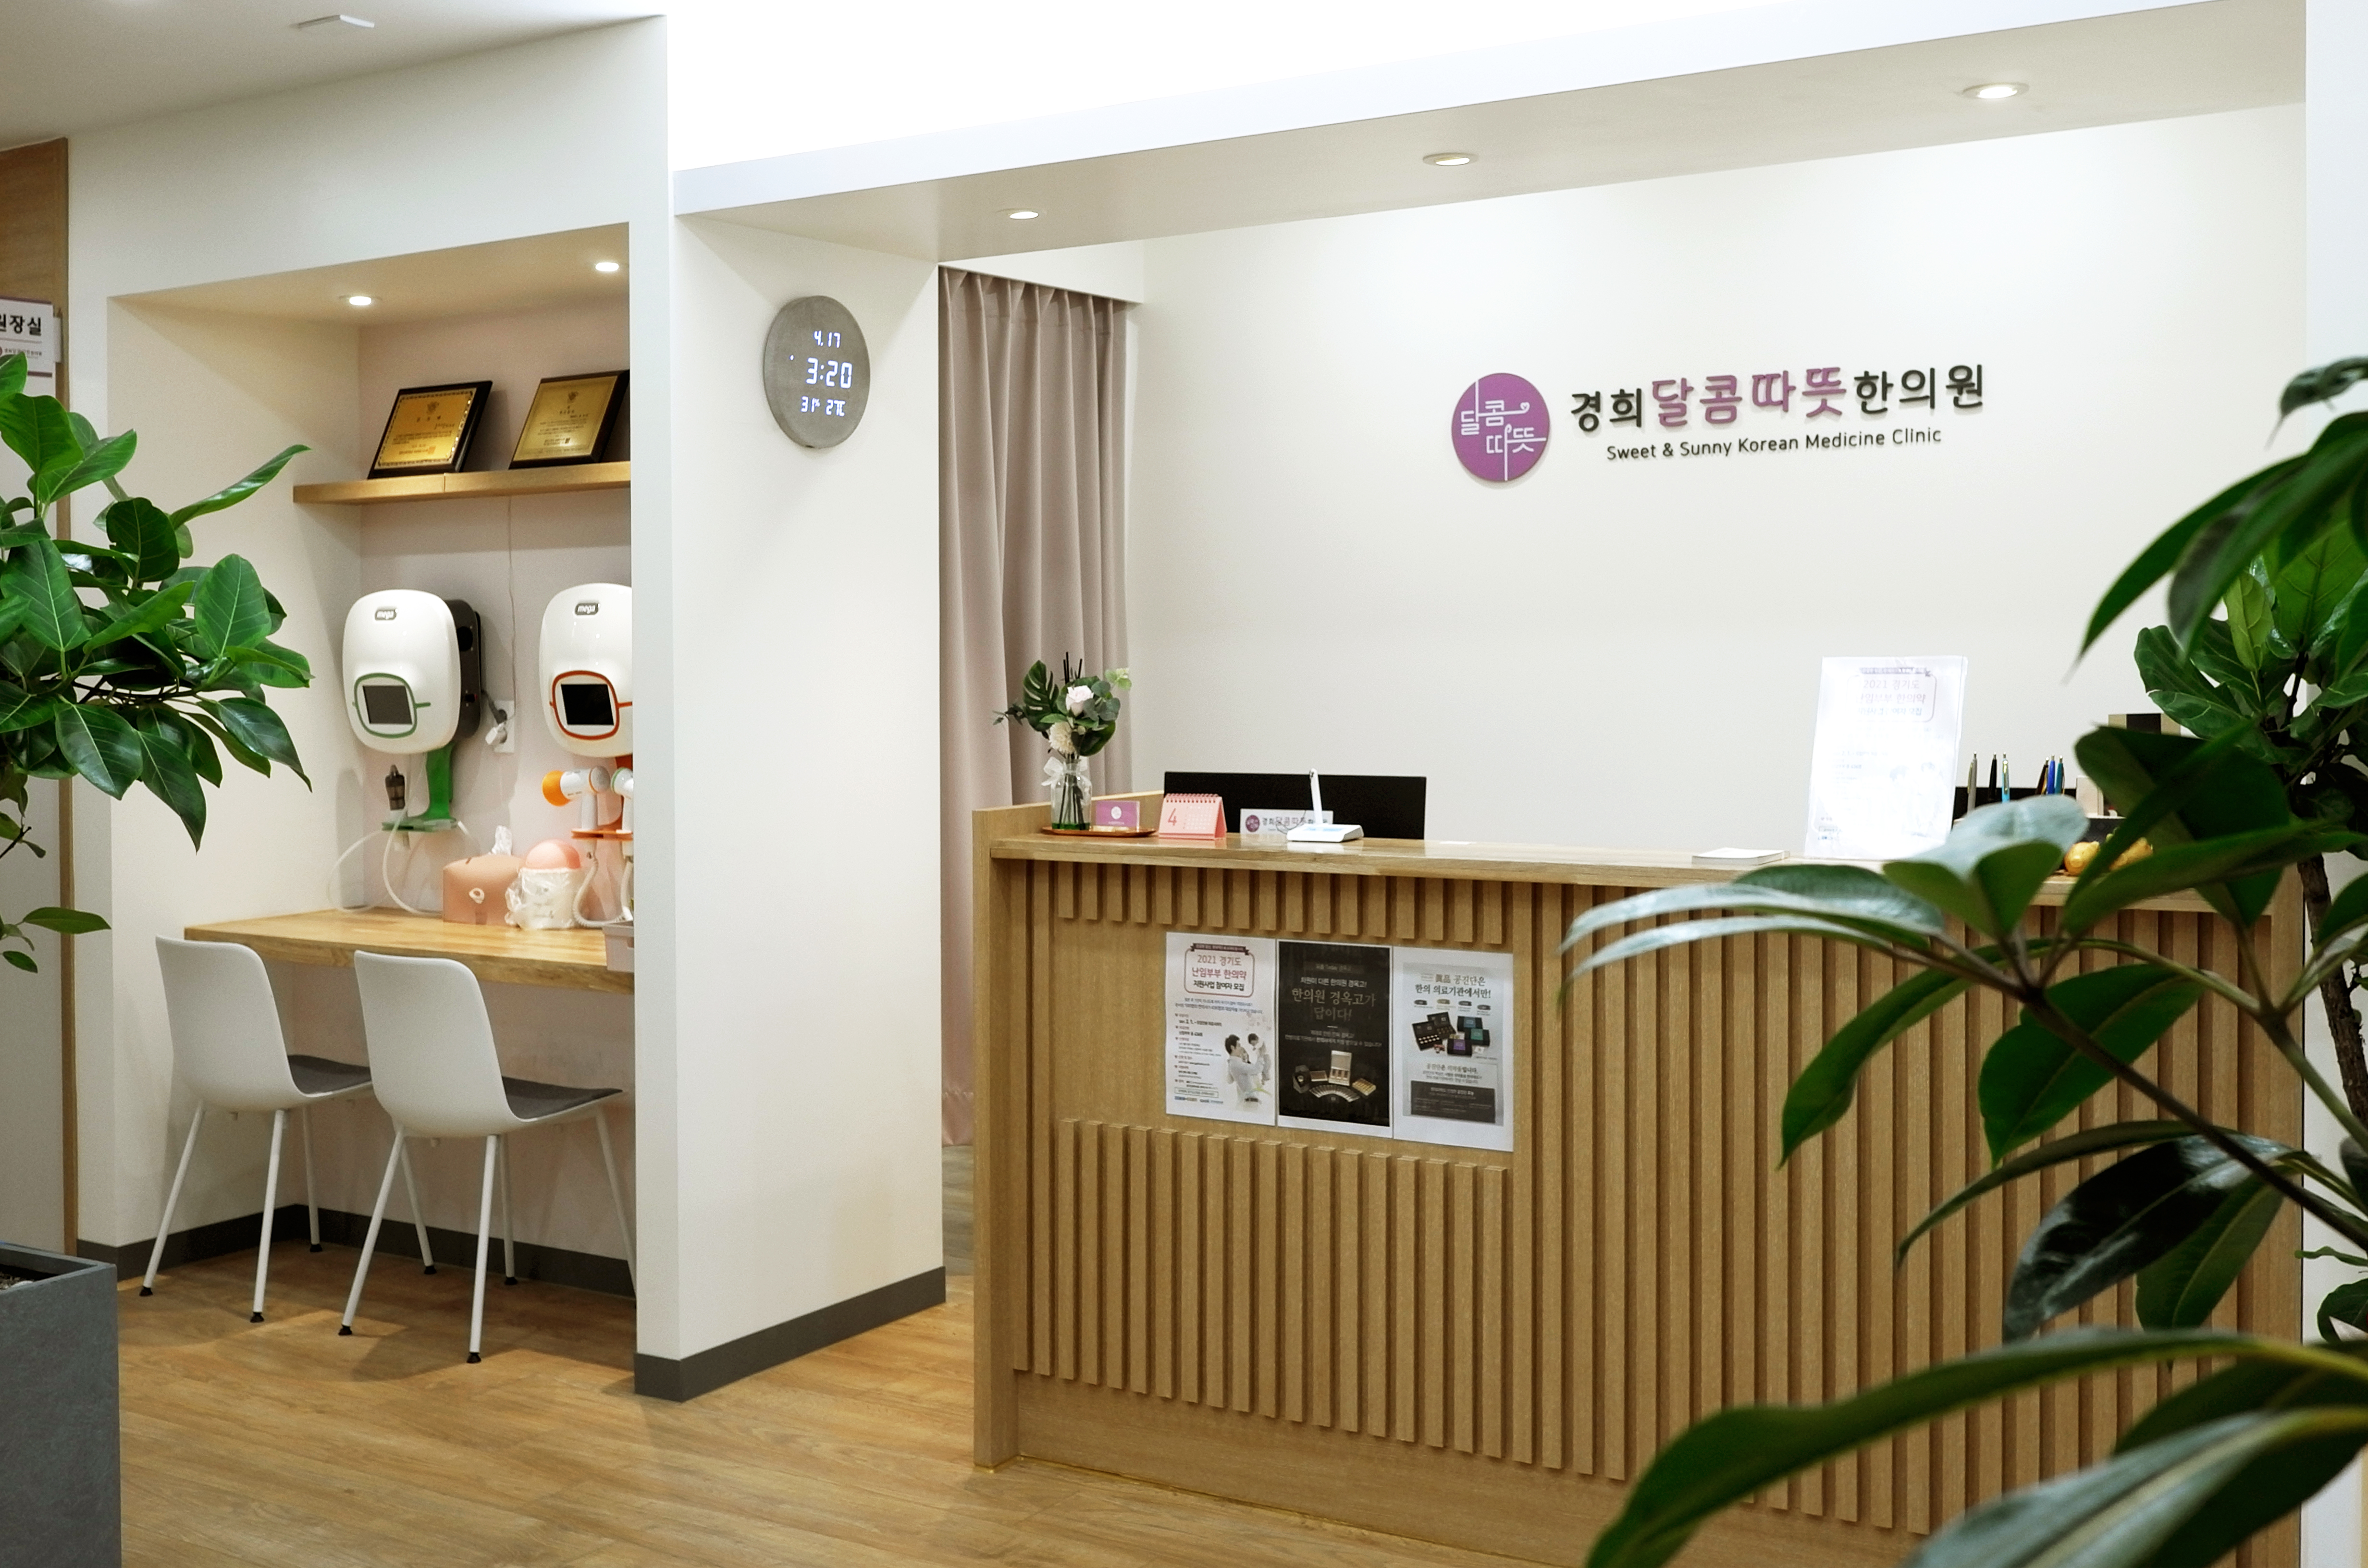 Kyung Hee Sweet & Sunny Korean Medicine Clinic